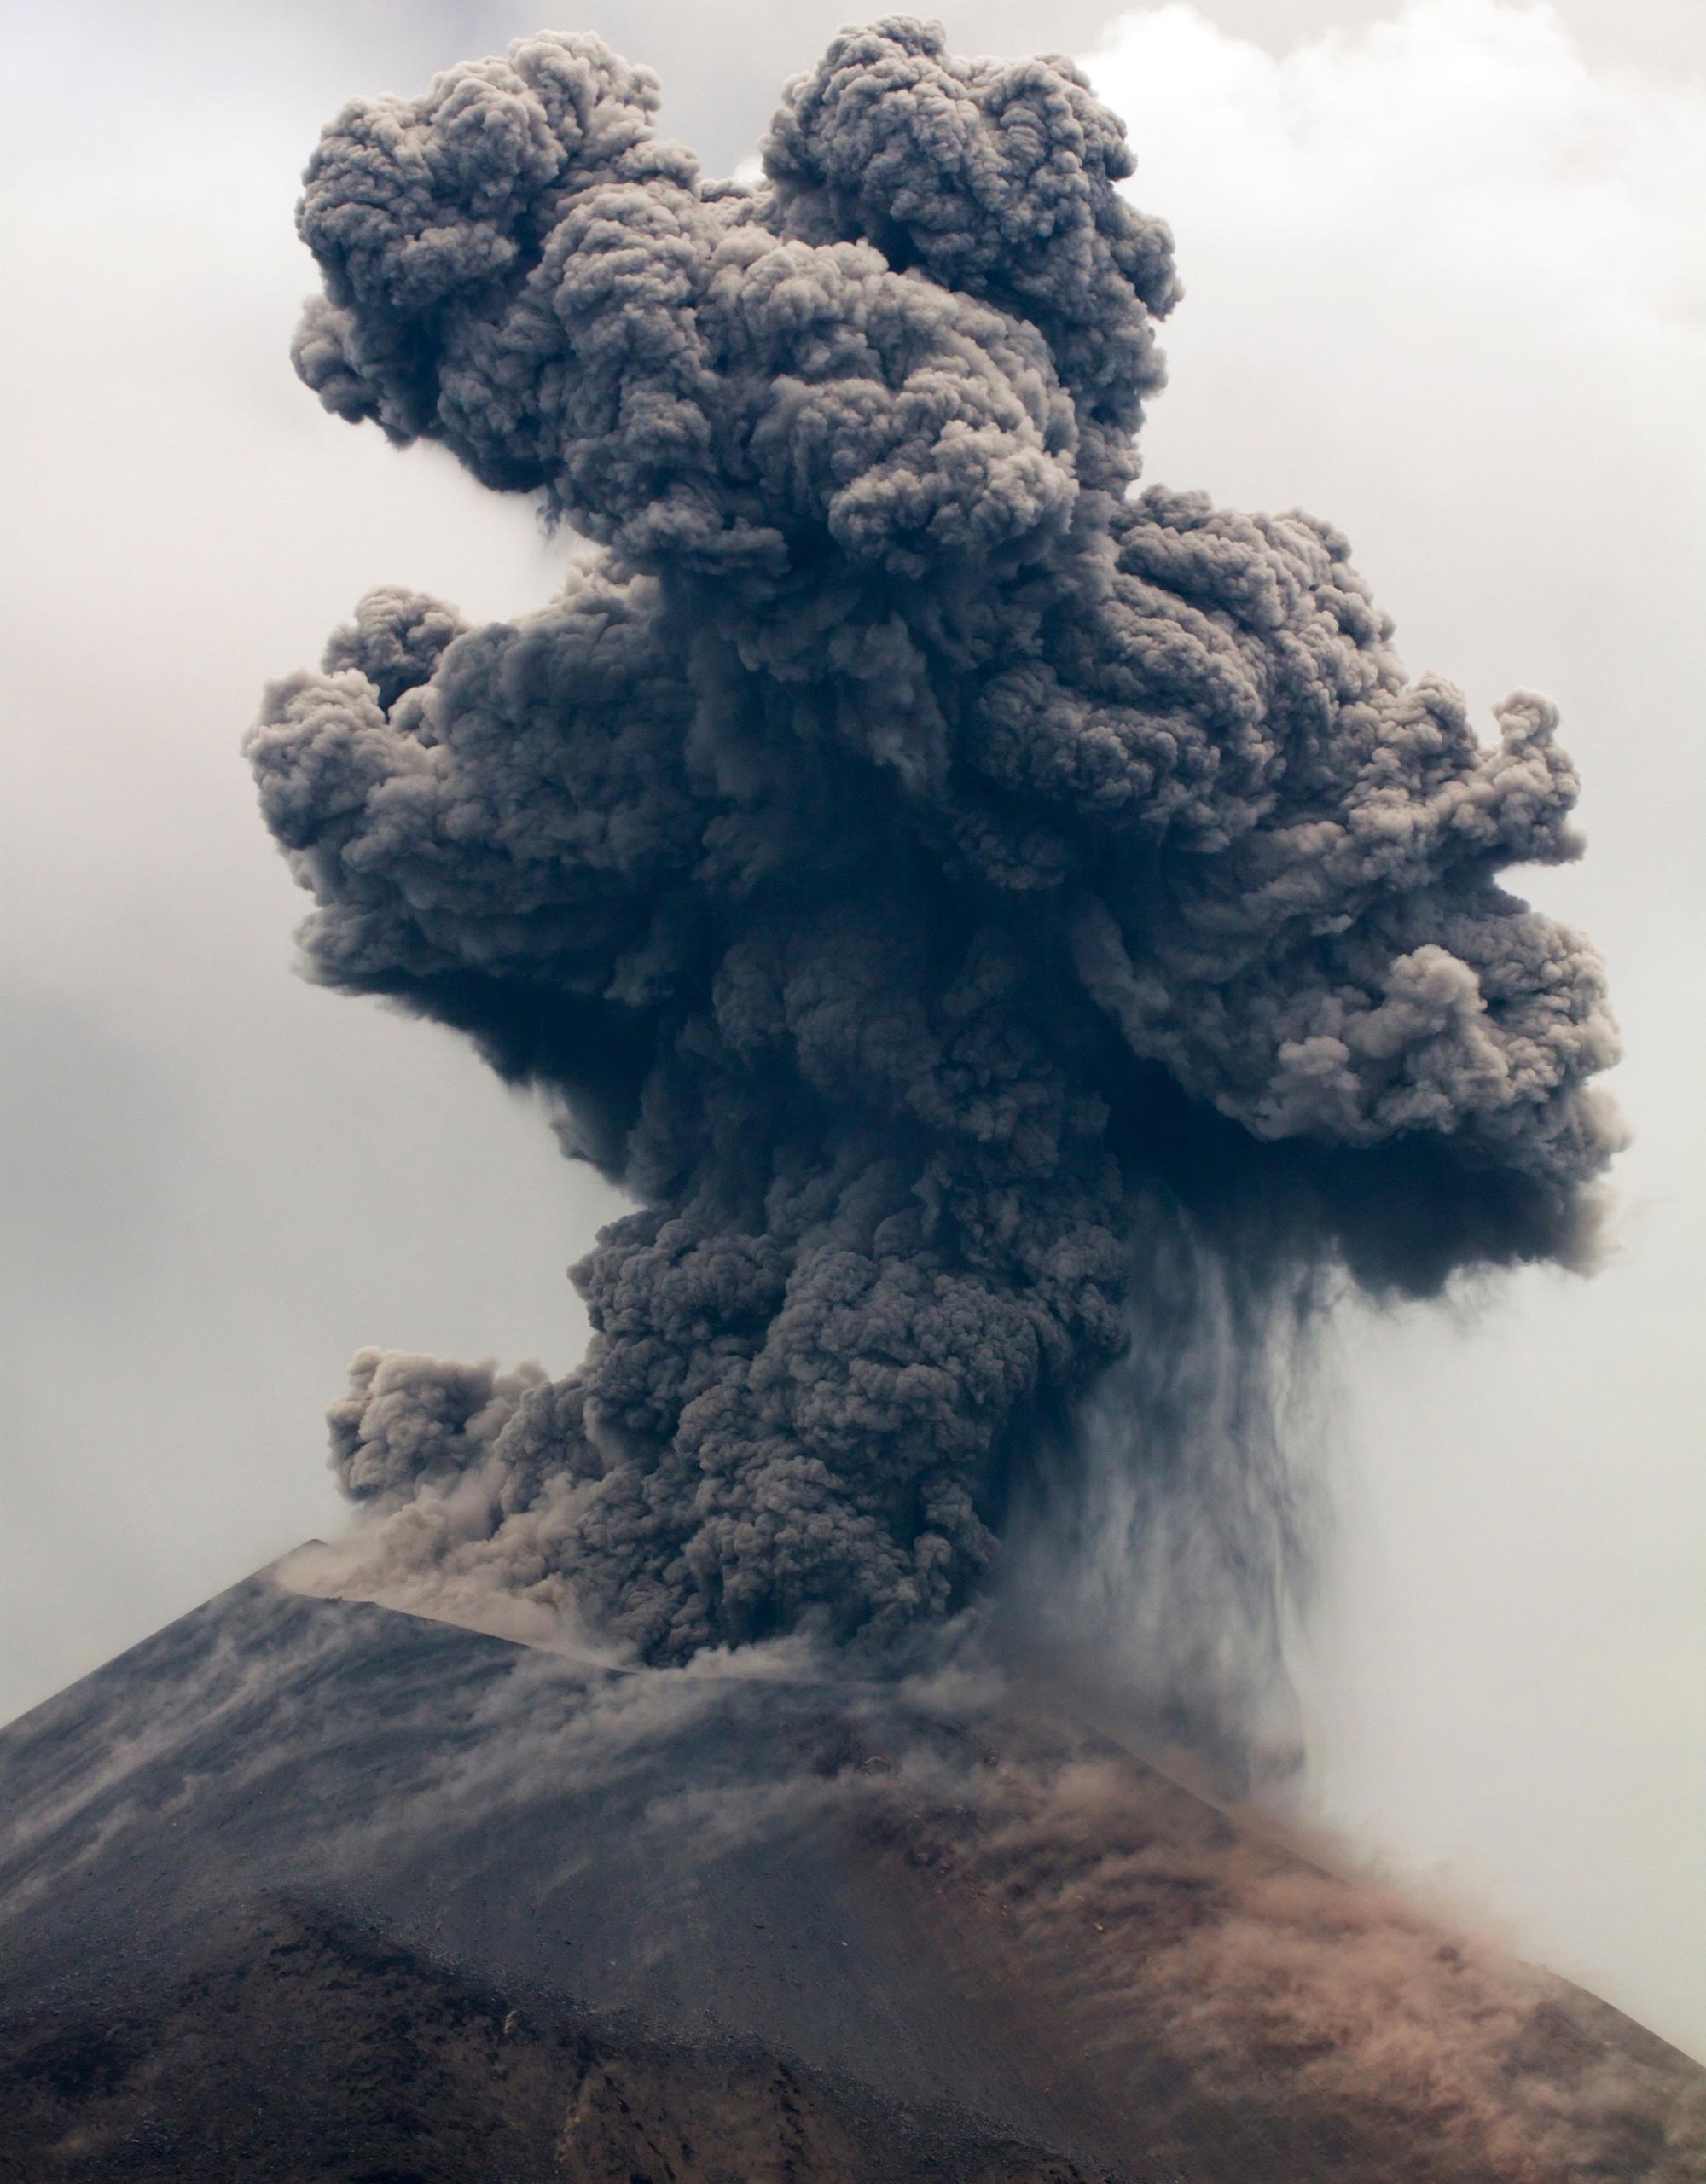 HD wallpaper, Indonesian Island Collapse, Powerful Volcanic Blast, Scientific Study, Tsunami Cause, Phone Hd Volcano Background Image, 2000X2560 Hd Phone